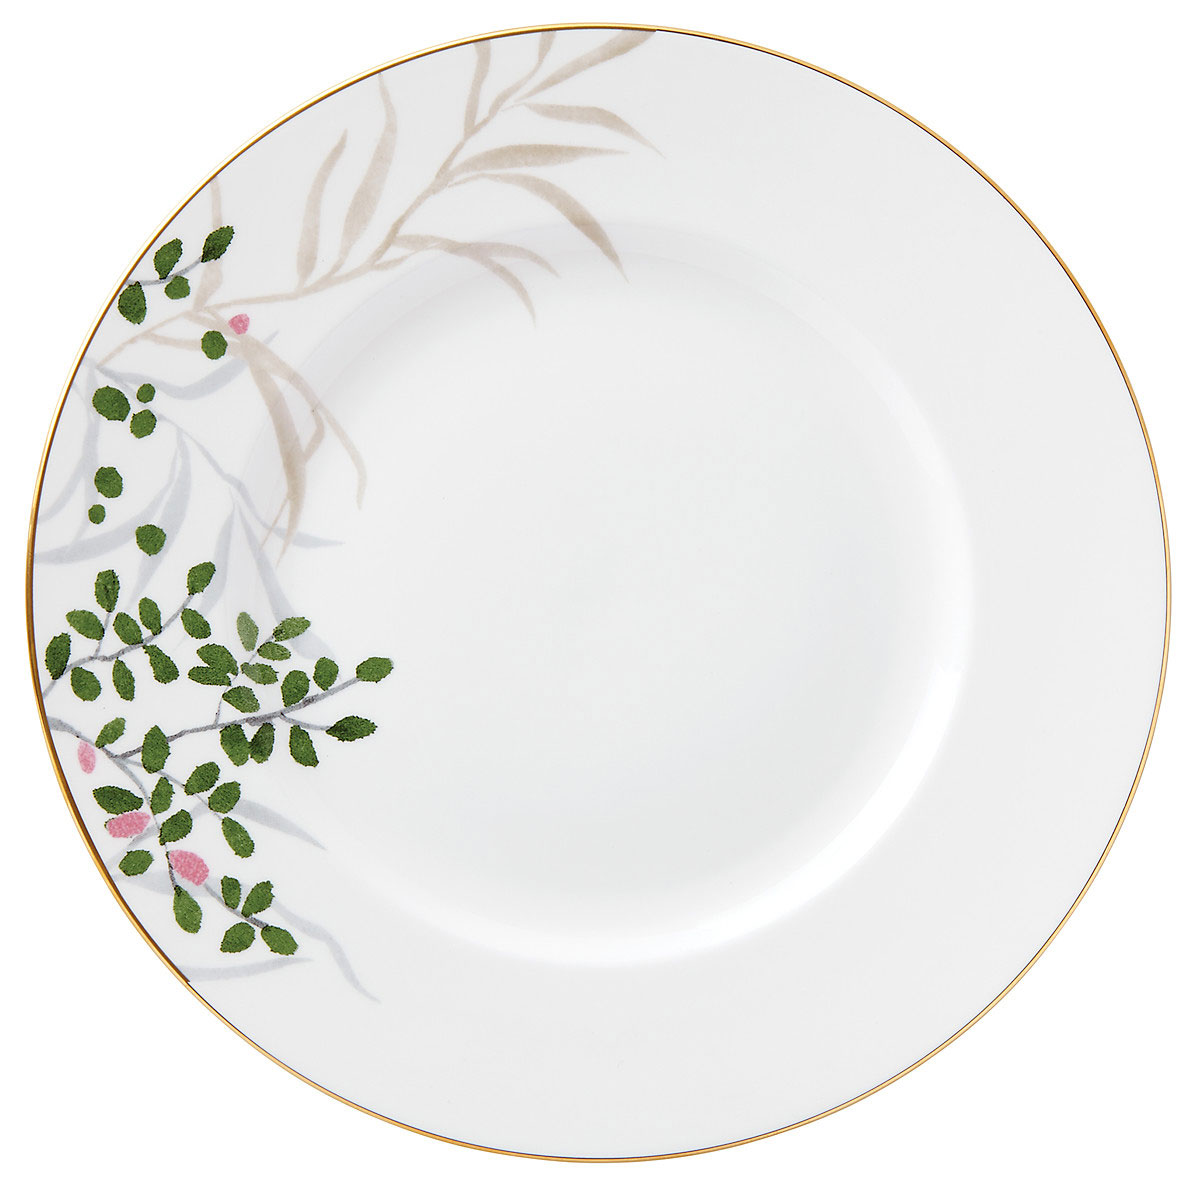 Kate Spade China by Lenox, Birch Way Dinner Plate, Single